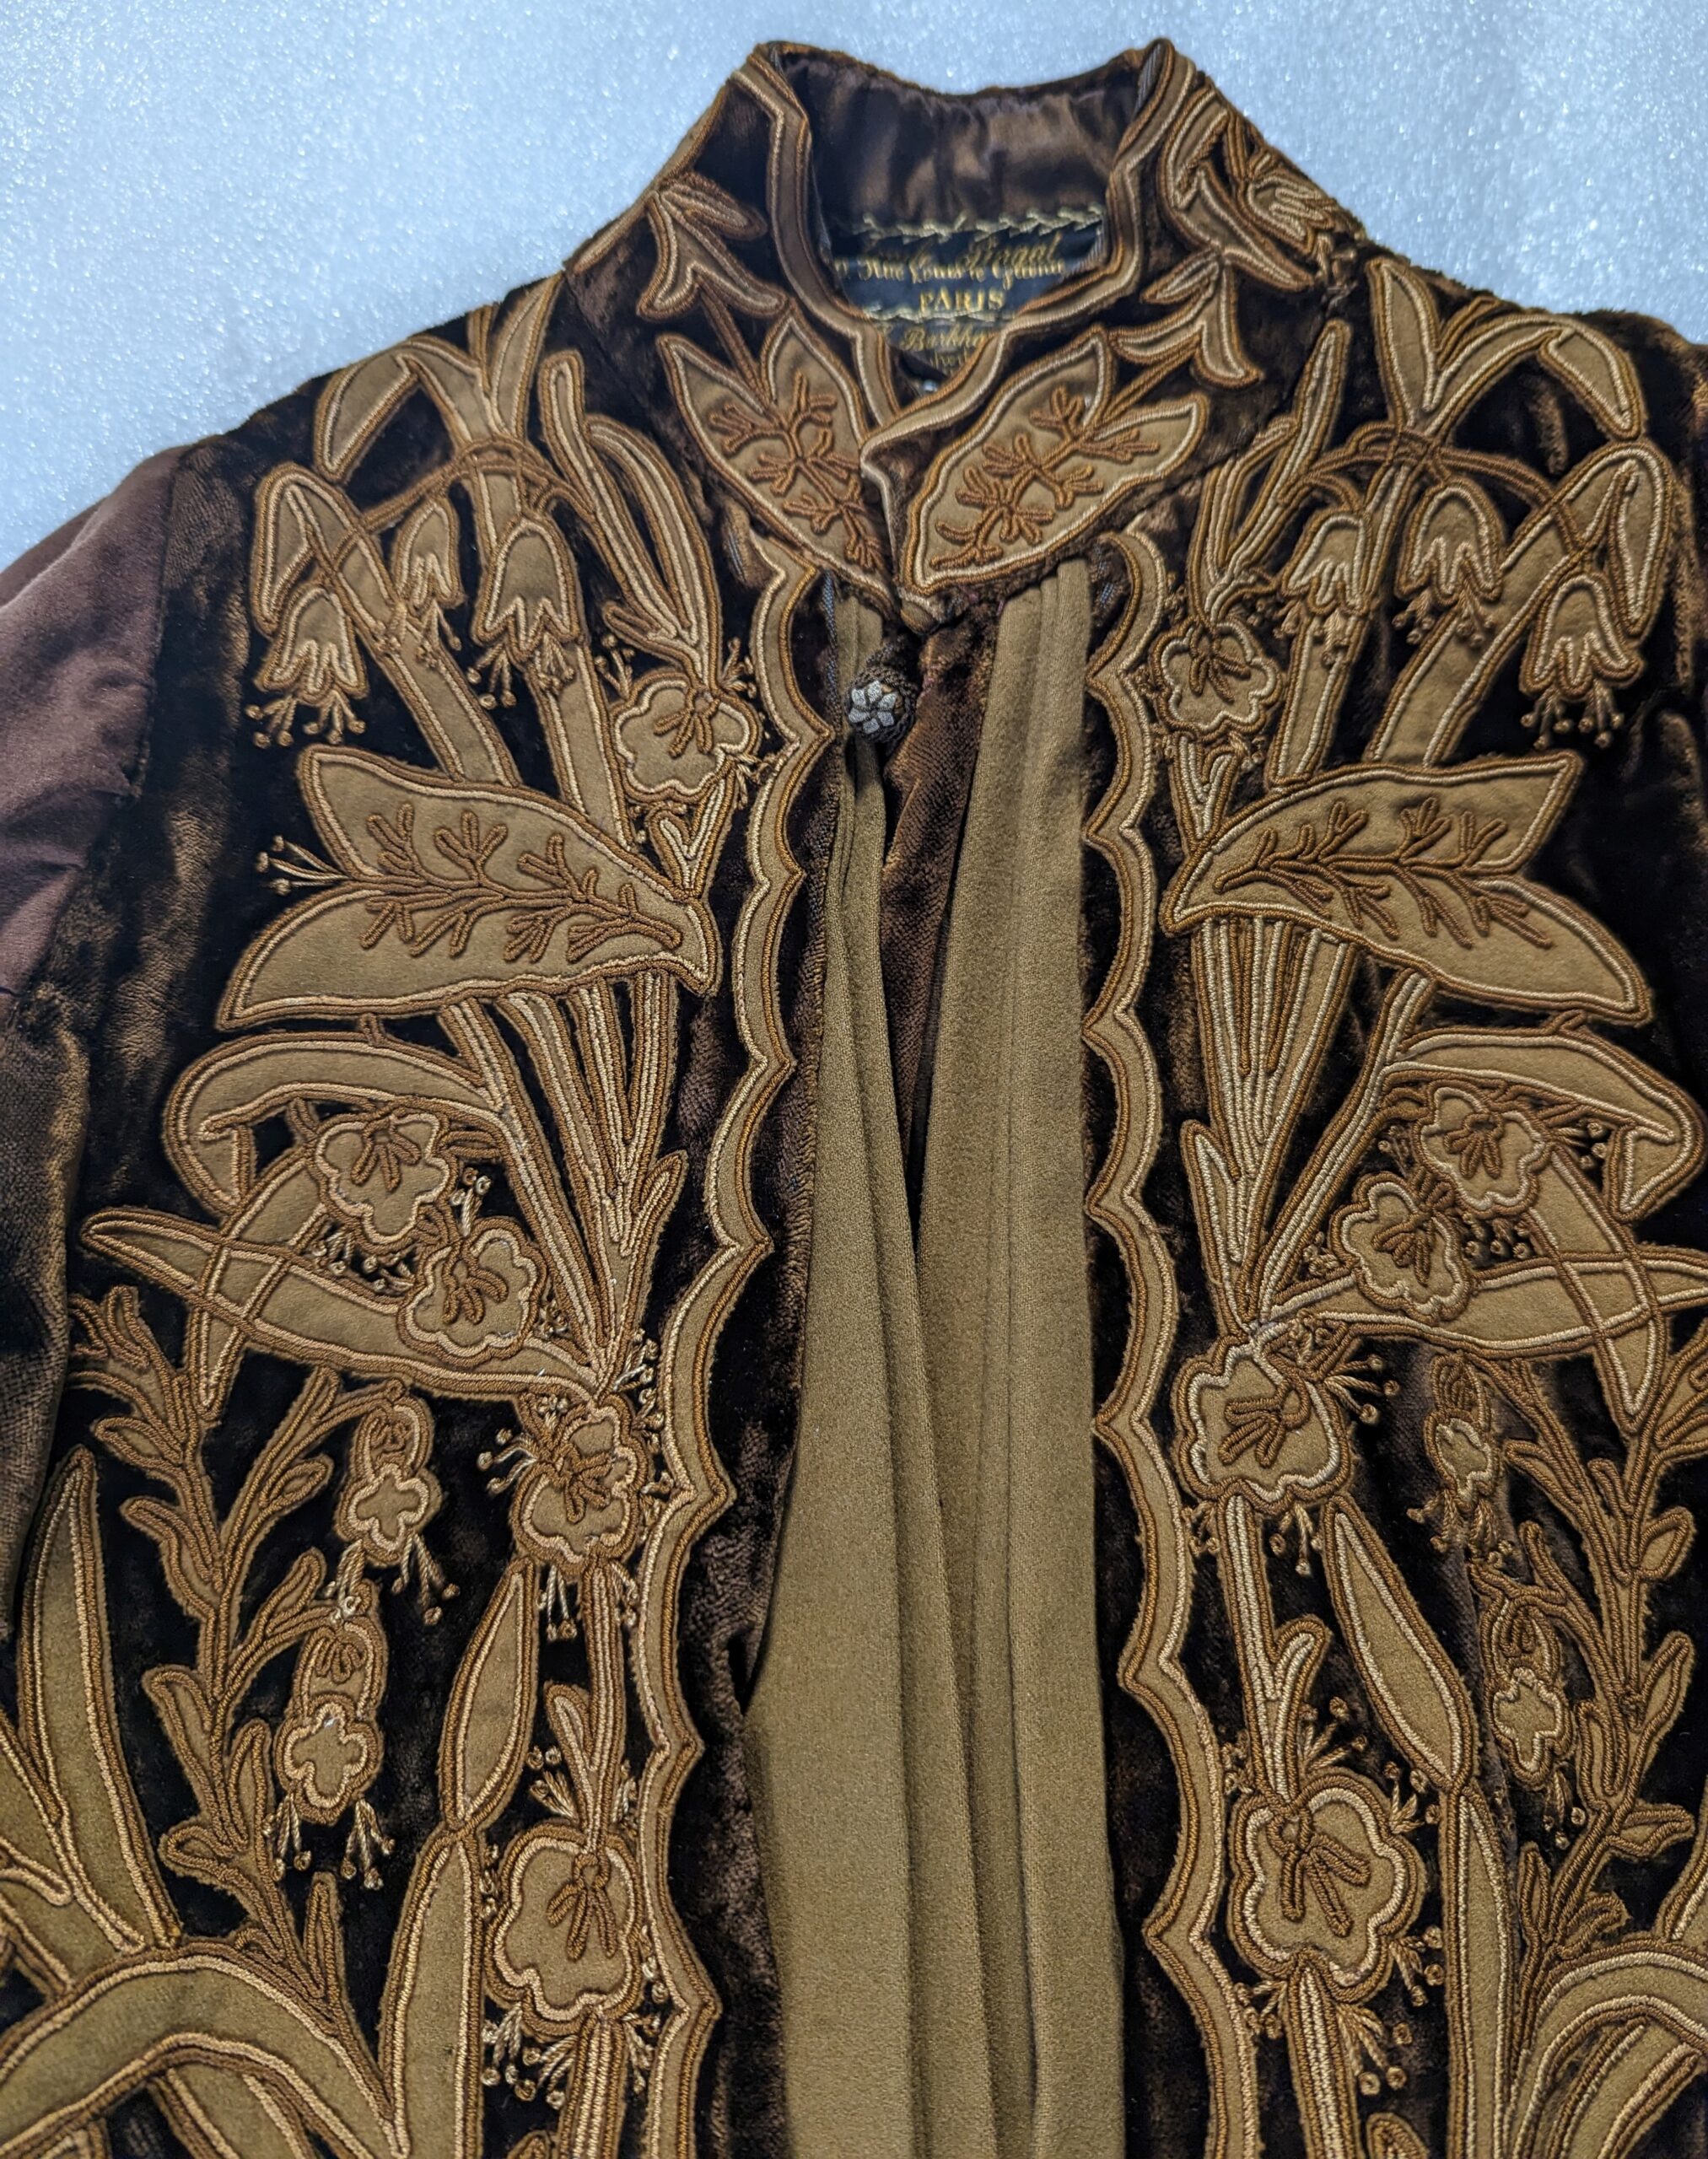 Detail of coat front